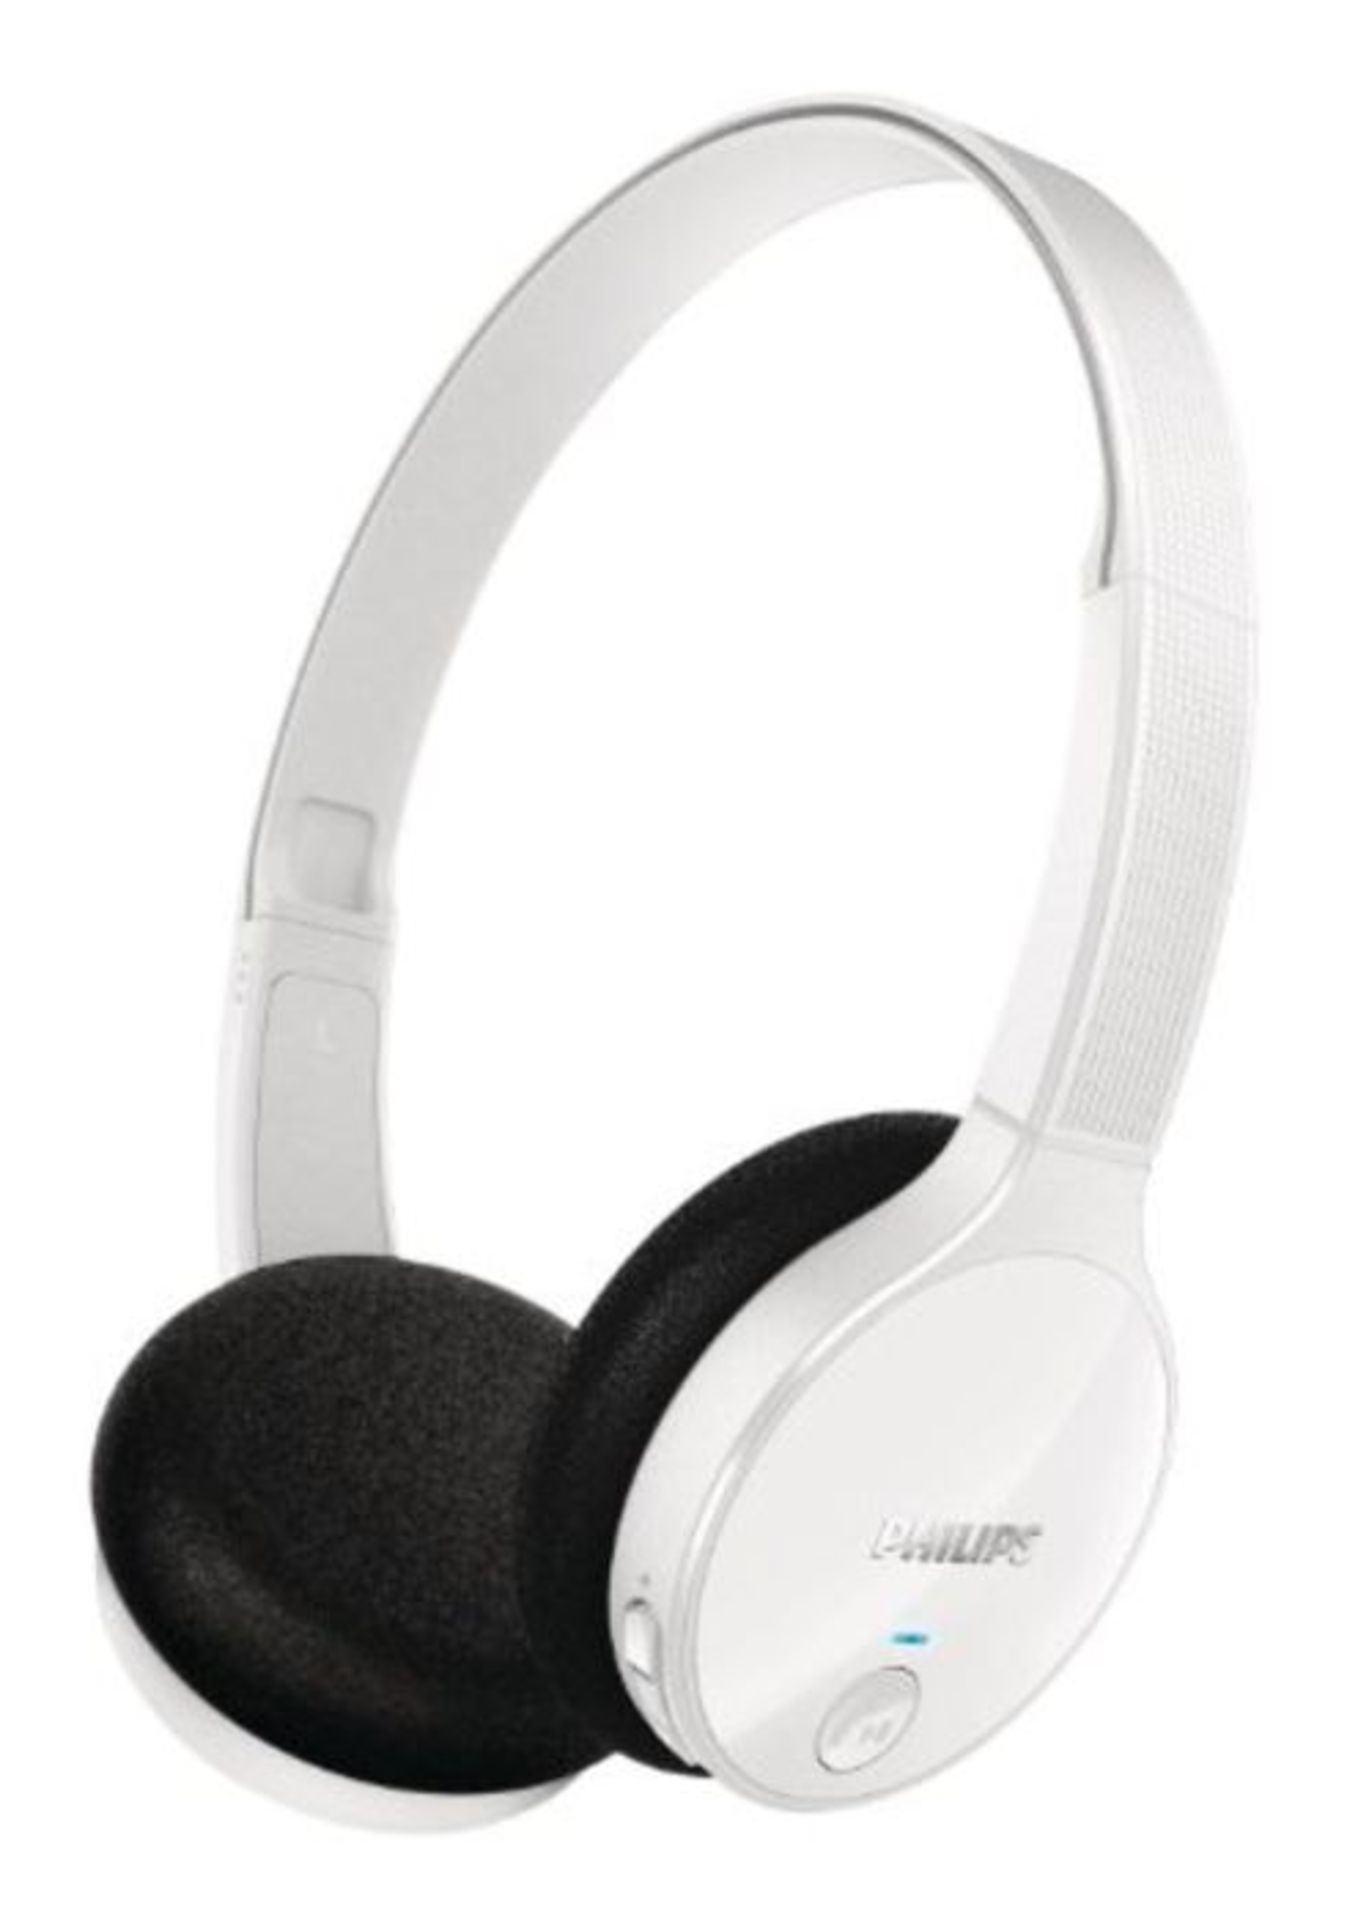 Philips SHB4000/10 Wireless Bluetooth Stereo Headphones